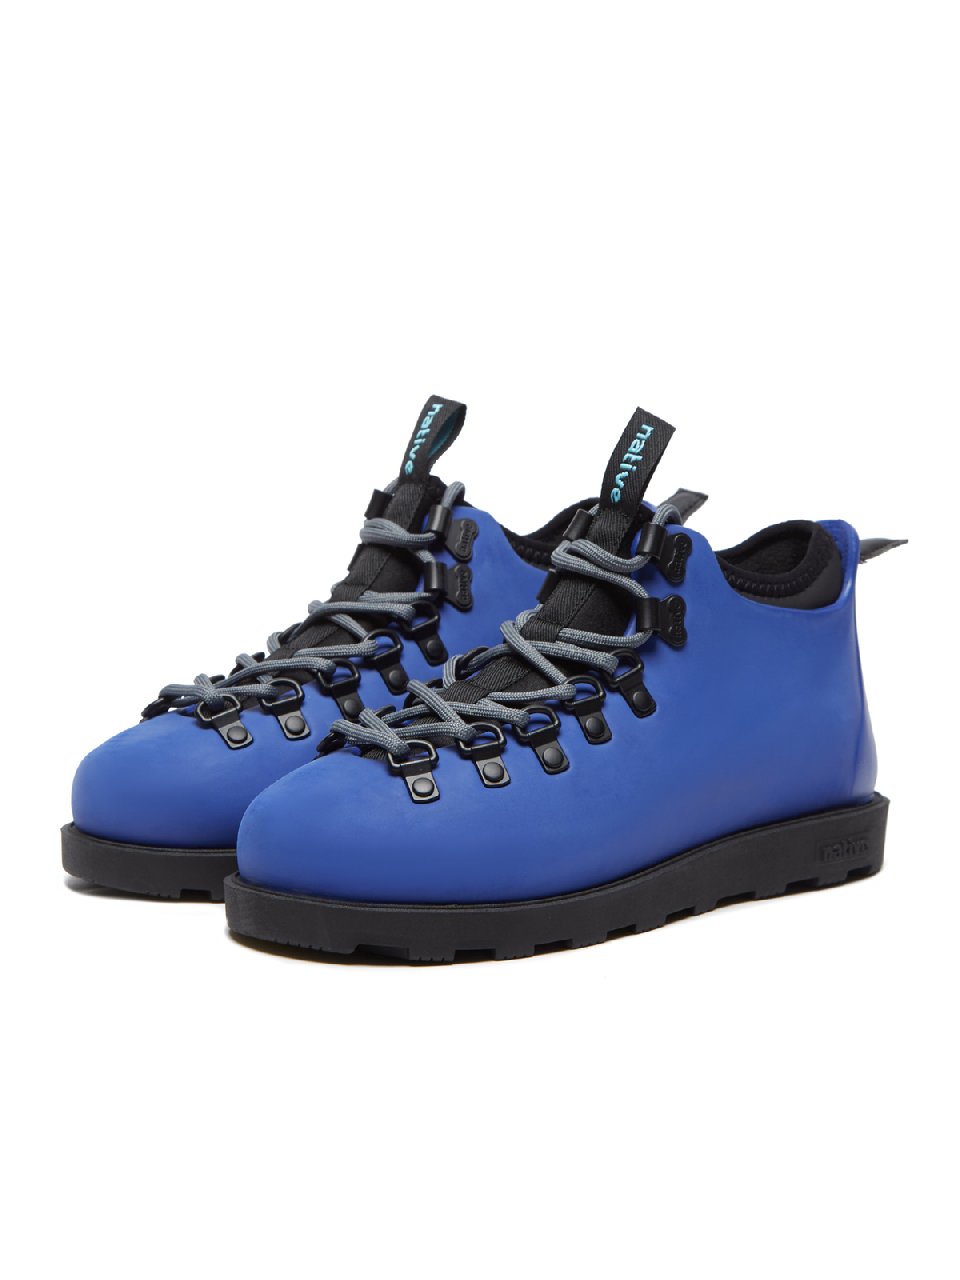 Ботинки высокие Native Fitzsimmons Citylite REFLEX BLUE/ JIFFY BLACK